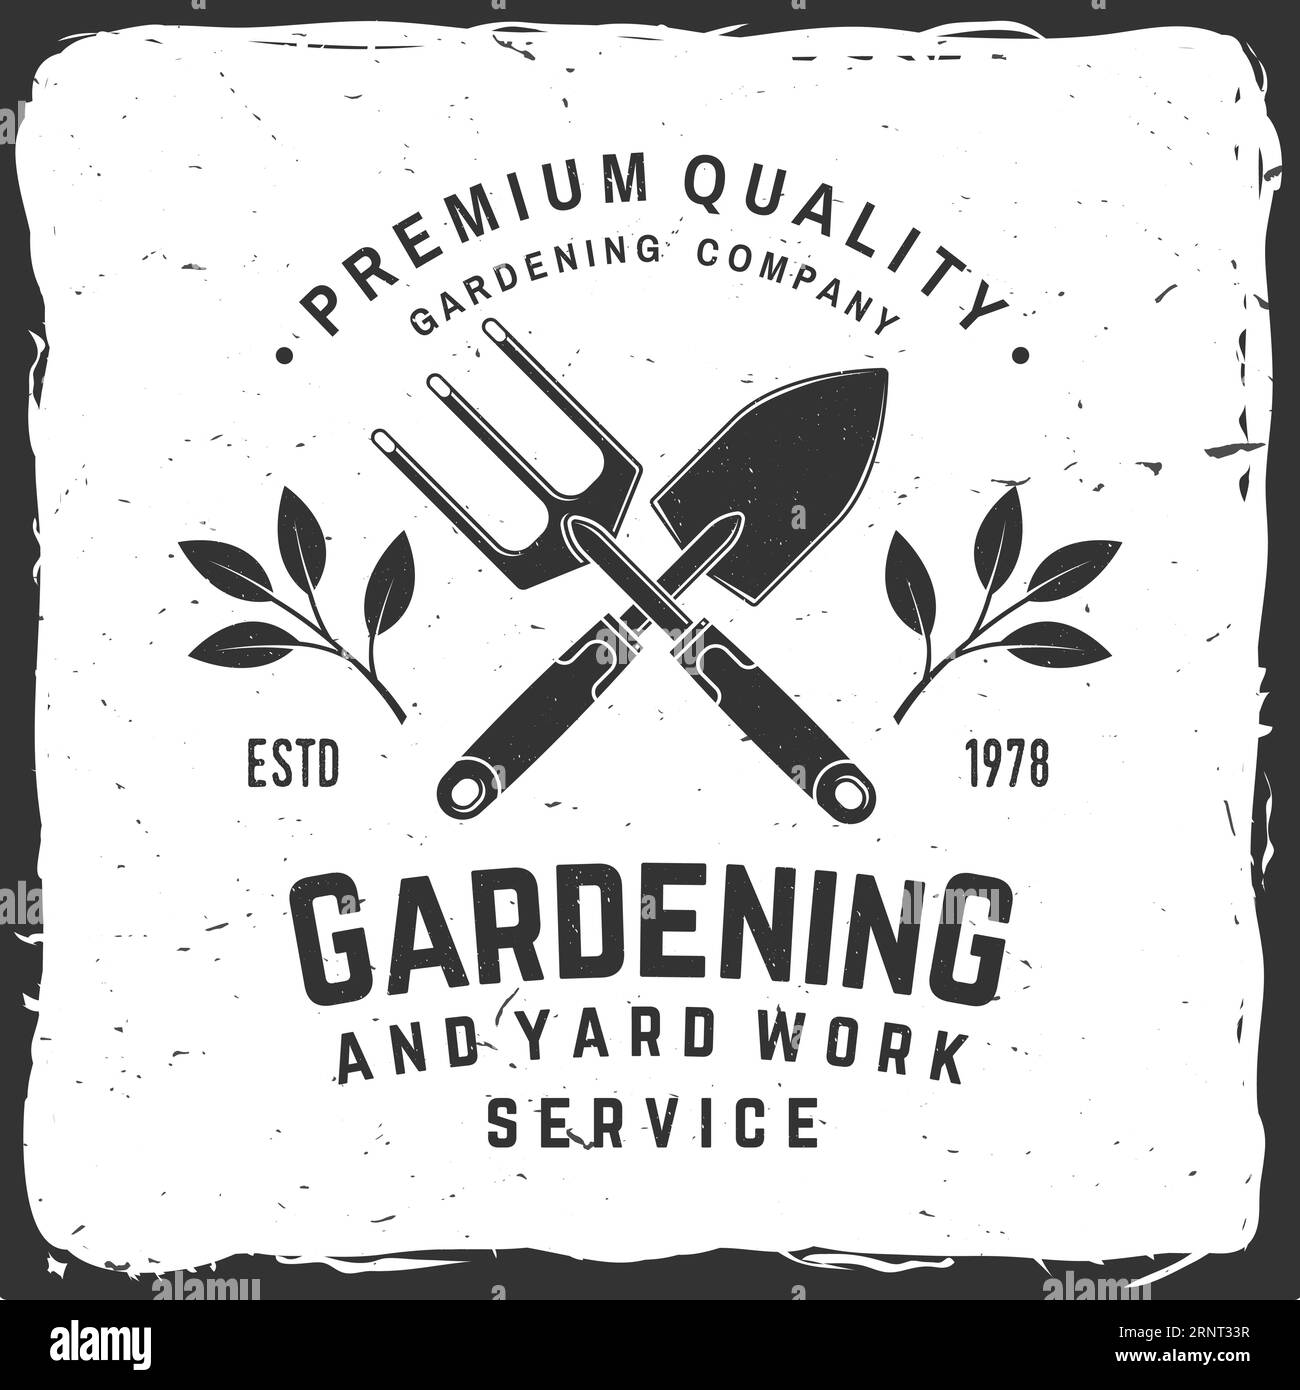 Gardening and yard work services emblem, label, badge, logo. Vector illustration. For sign, patch, shirt design with hand garden trowel, farming fork Stock Vector